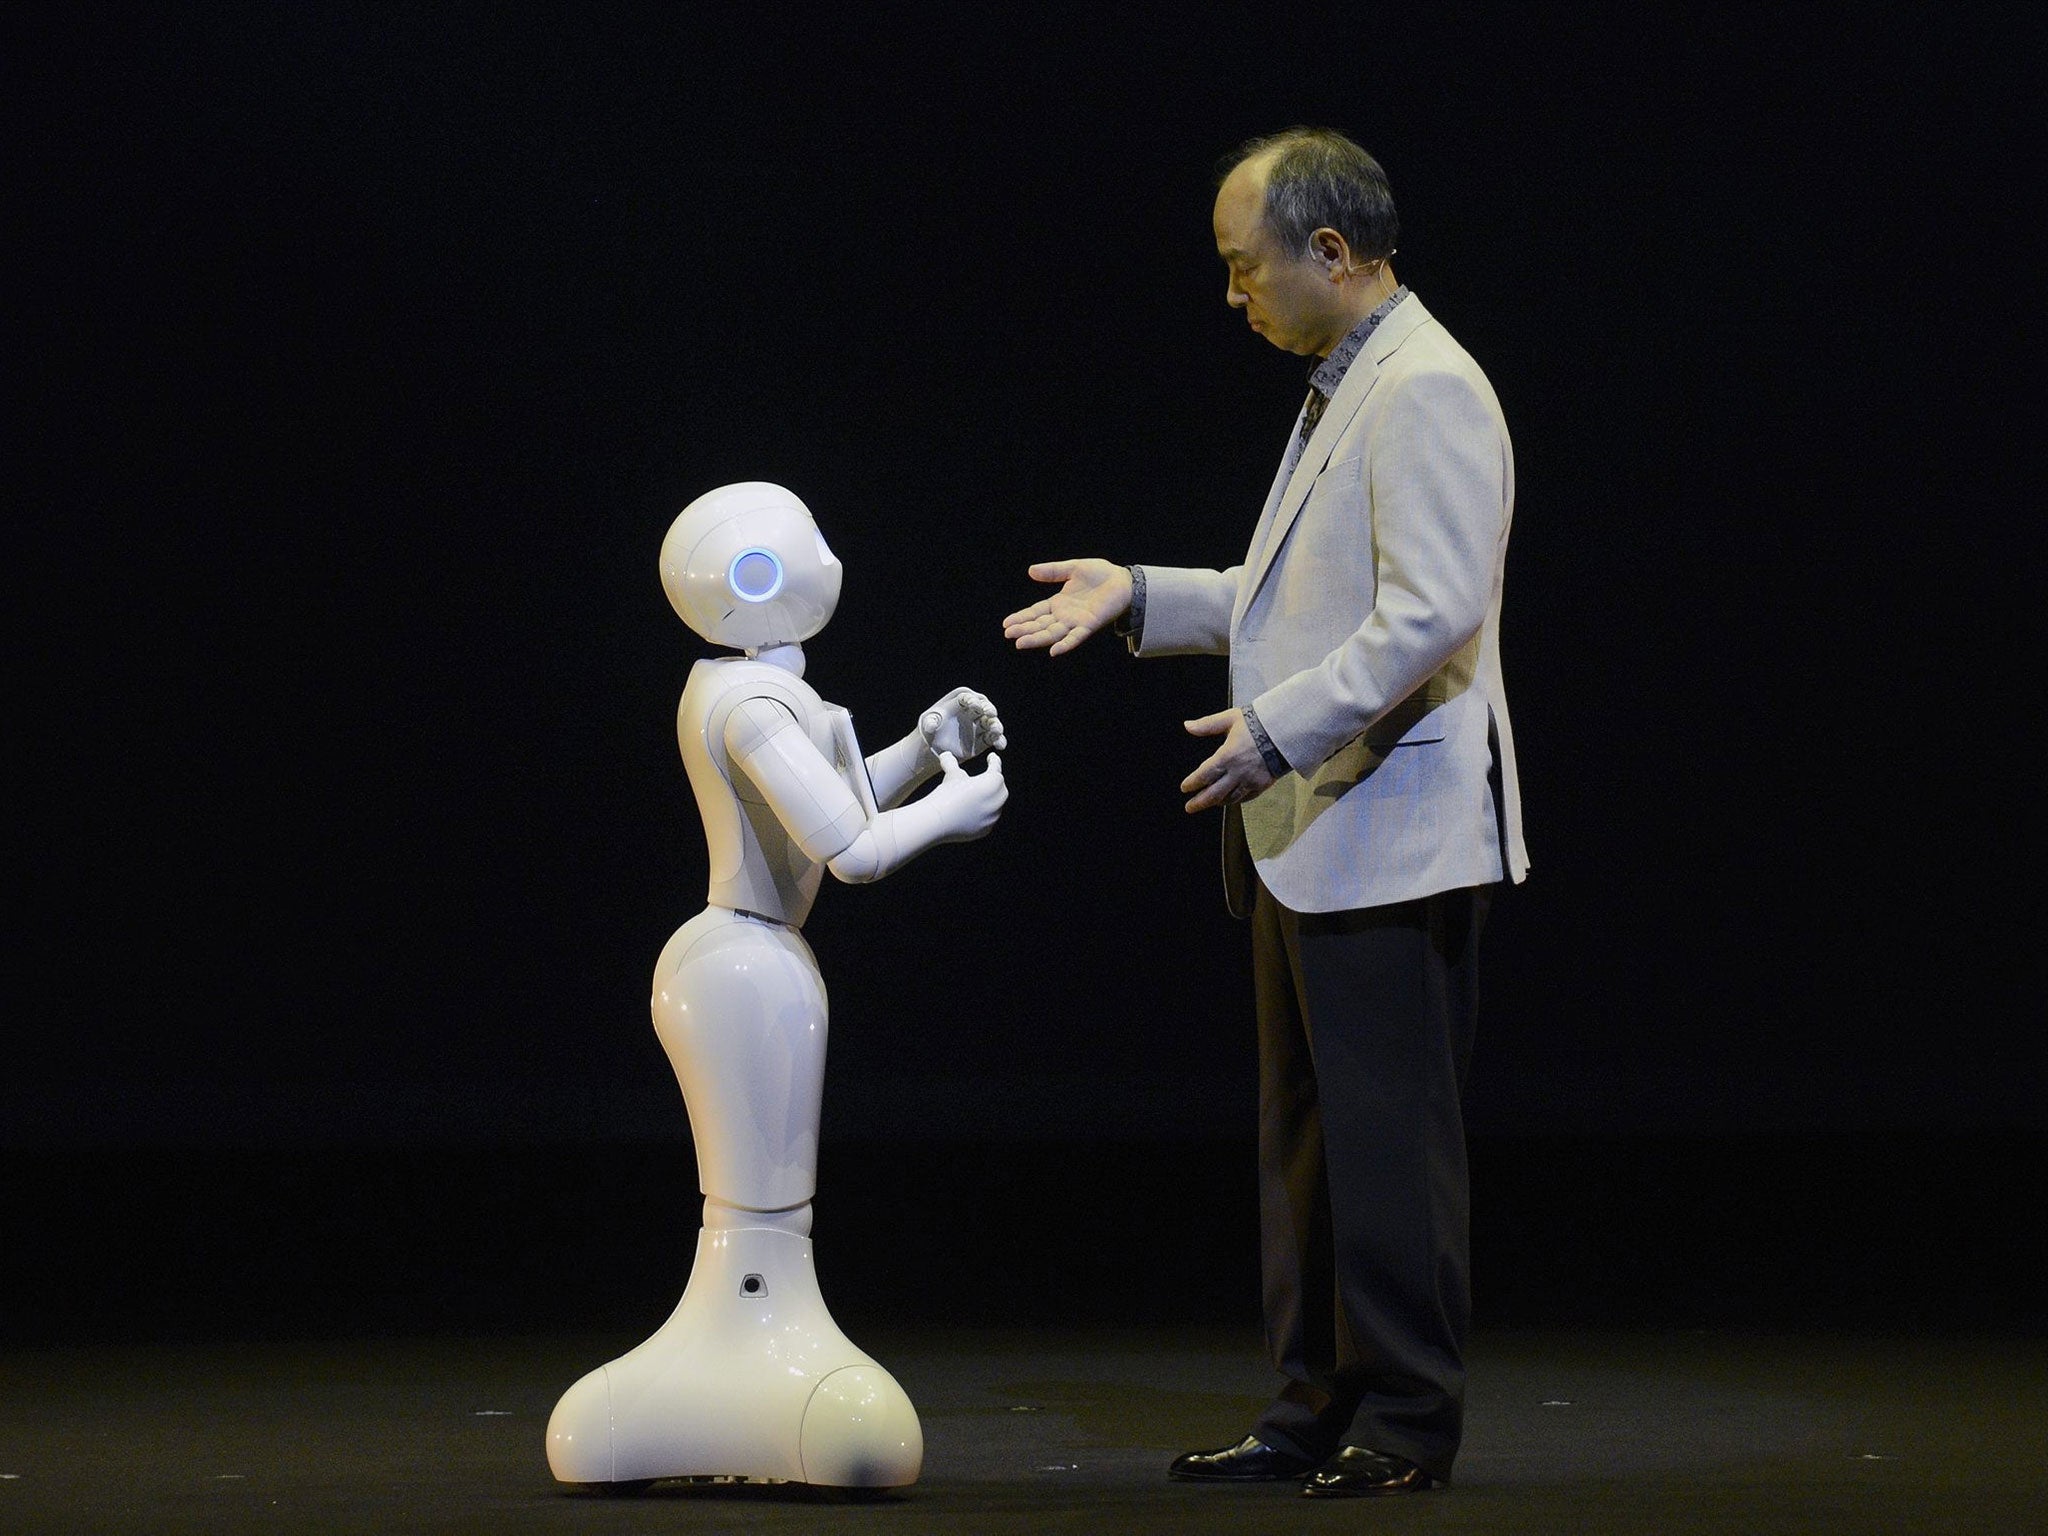 Electric dreams: SoftBank CEO Masayoshi Son interacts with humanoid robot ‘Pepper’ EPA